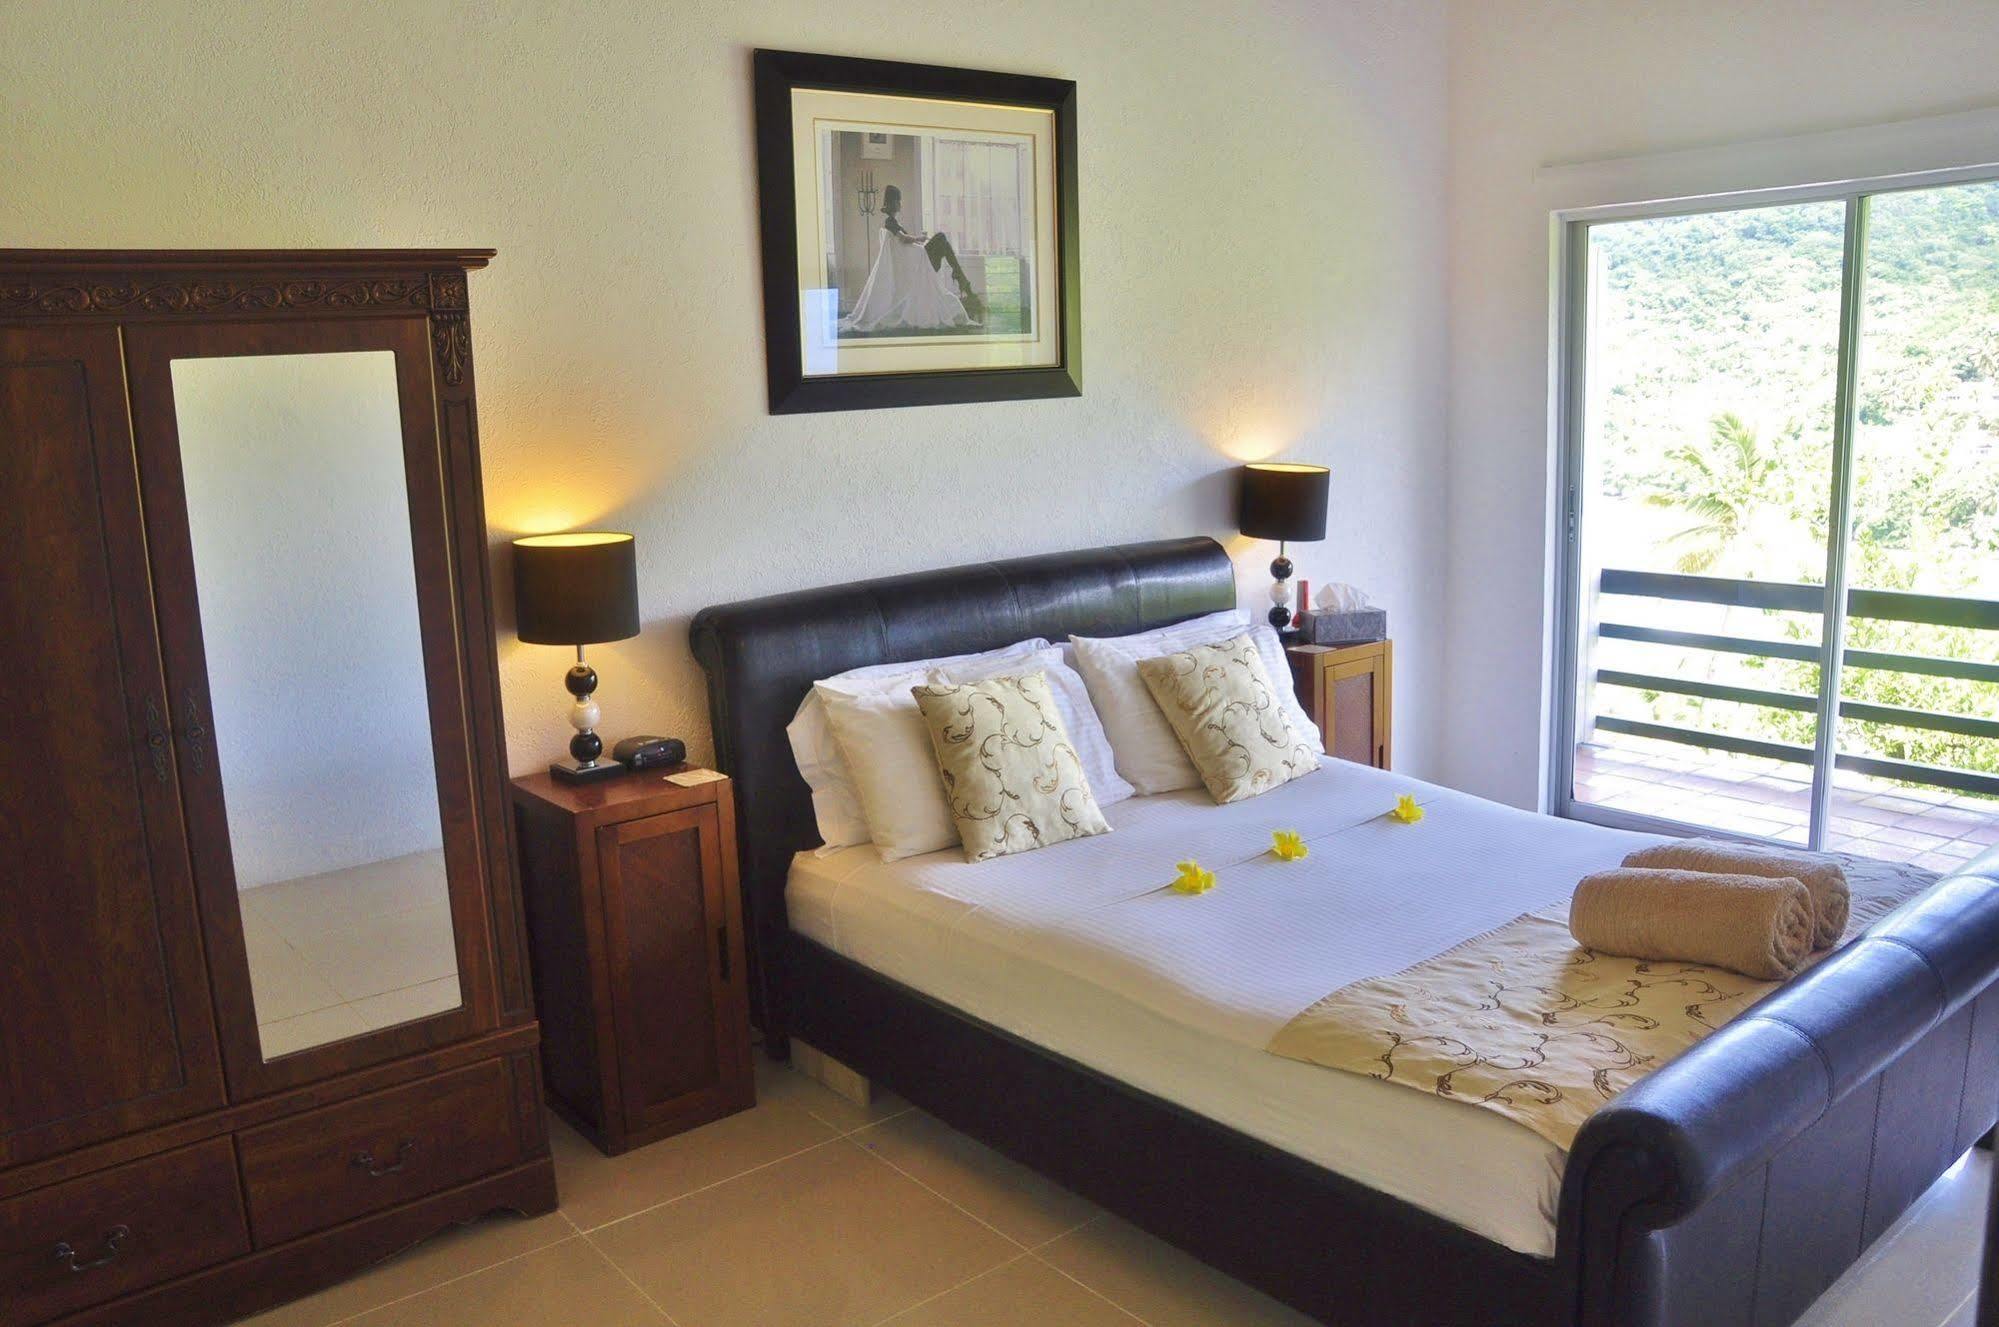 Marigot Palms Luxury Guesthouse Κάστρις Εξωτερικό φωτογραφία